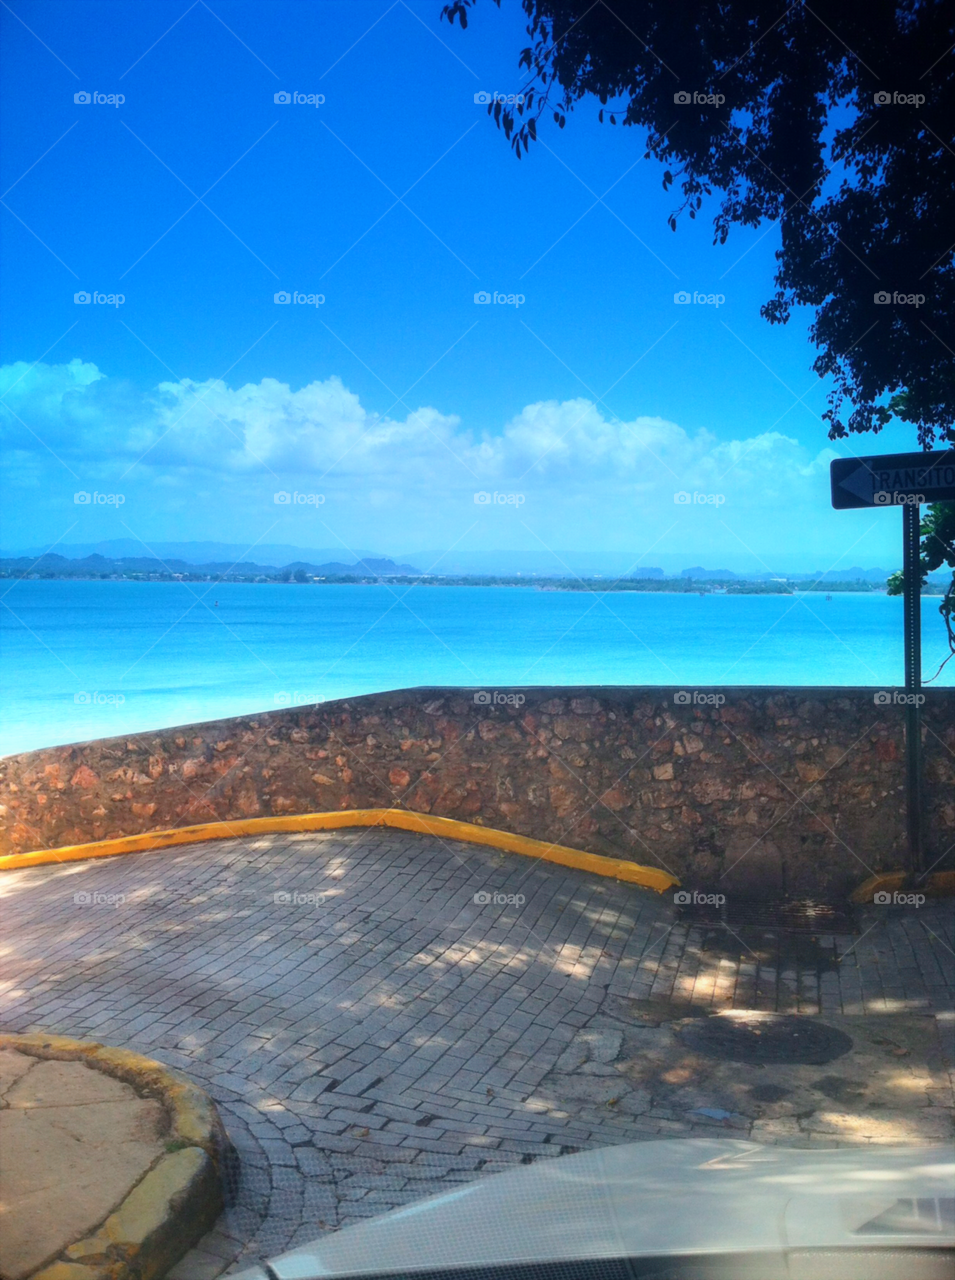 Old San Juan view from historic corner in Puerto Rico. Traveling, walking, photography, instant, blue, skies, cobalt, cobblestone, sidewalk, yellow, ocean, Caribbean, water